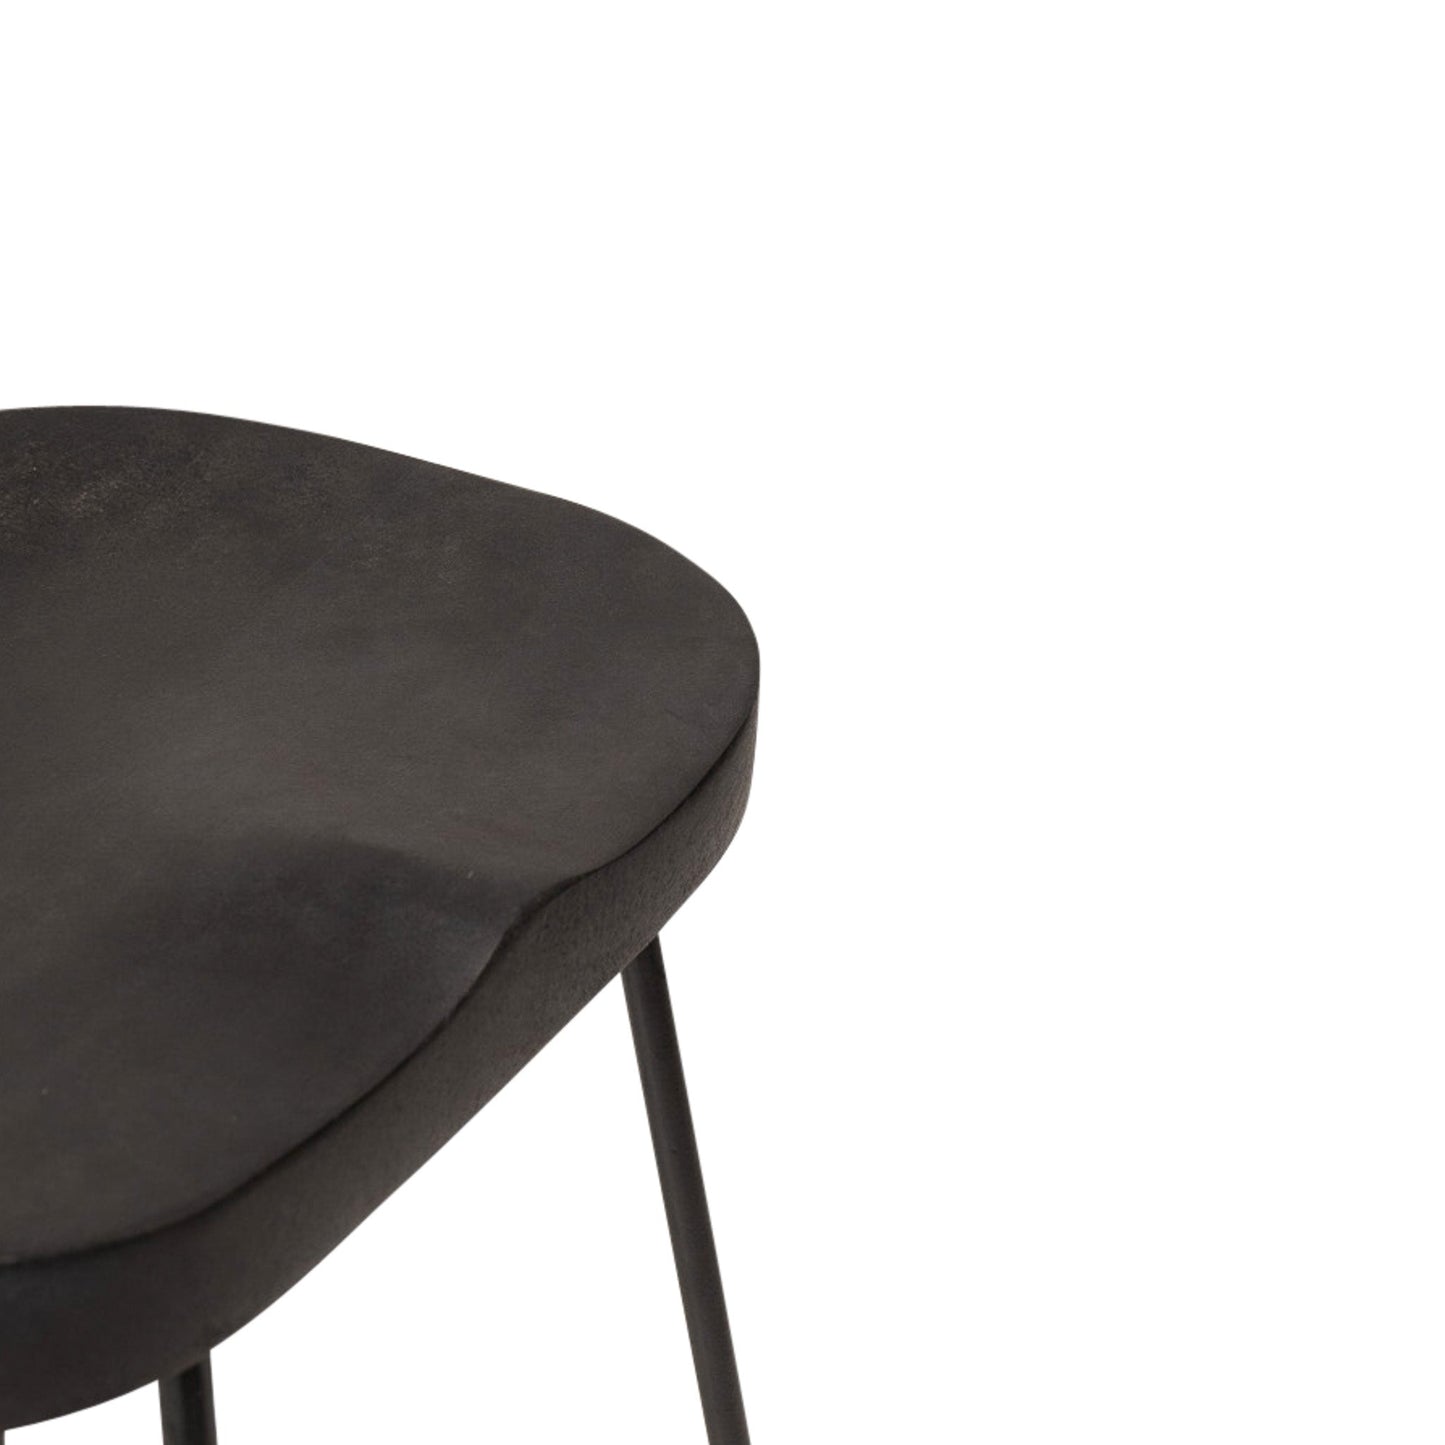 Aiden Black Wood Bar stool 